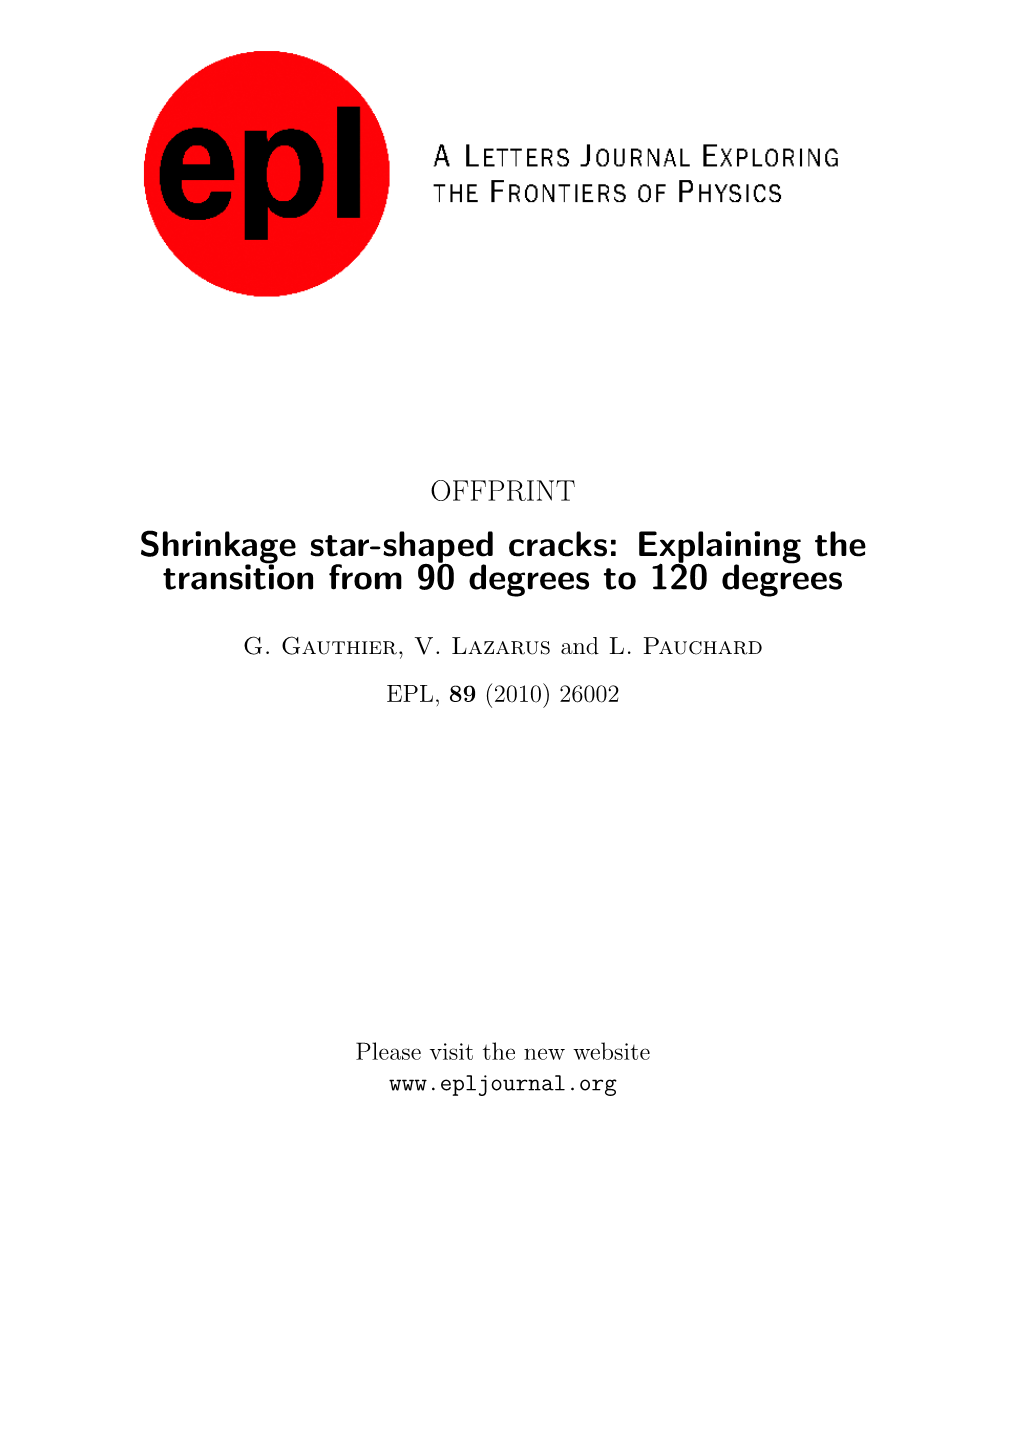 Shrinkage Star-Shaped Cracks: Explaining the Transition from 90 Degrees to 120 Degrees